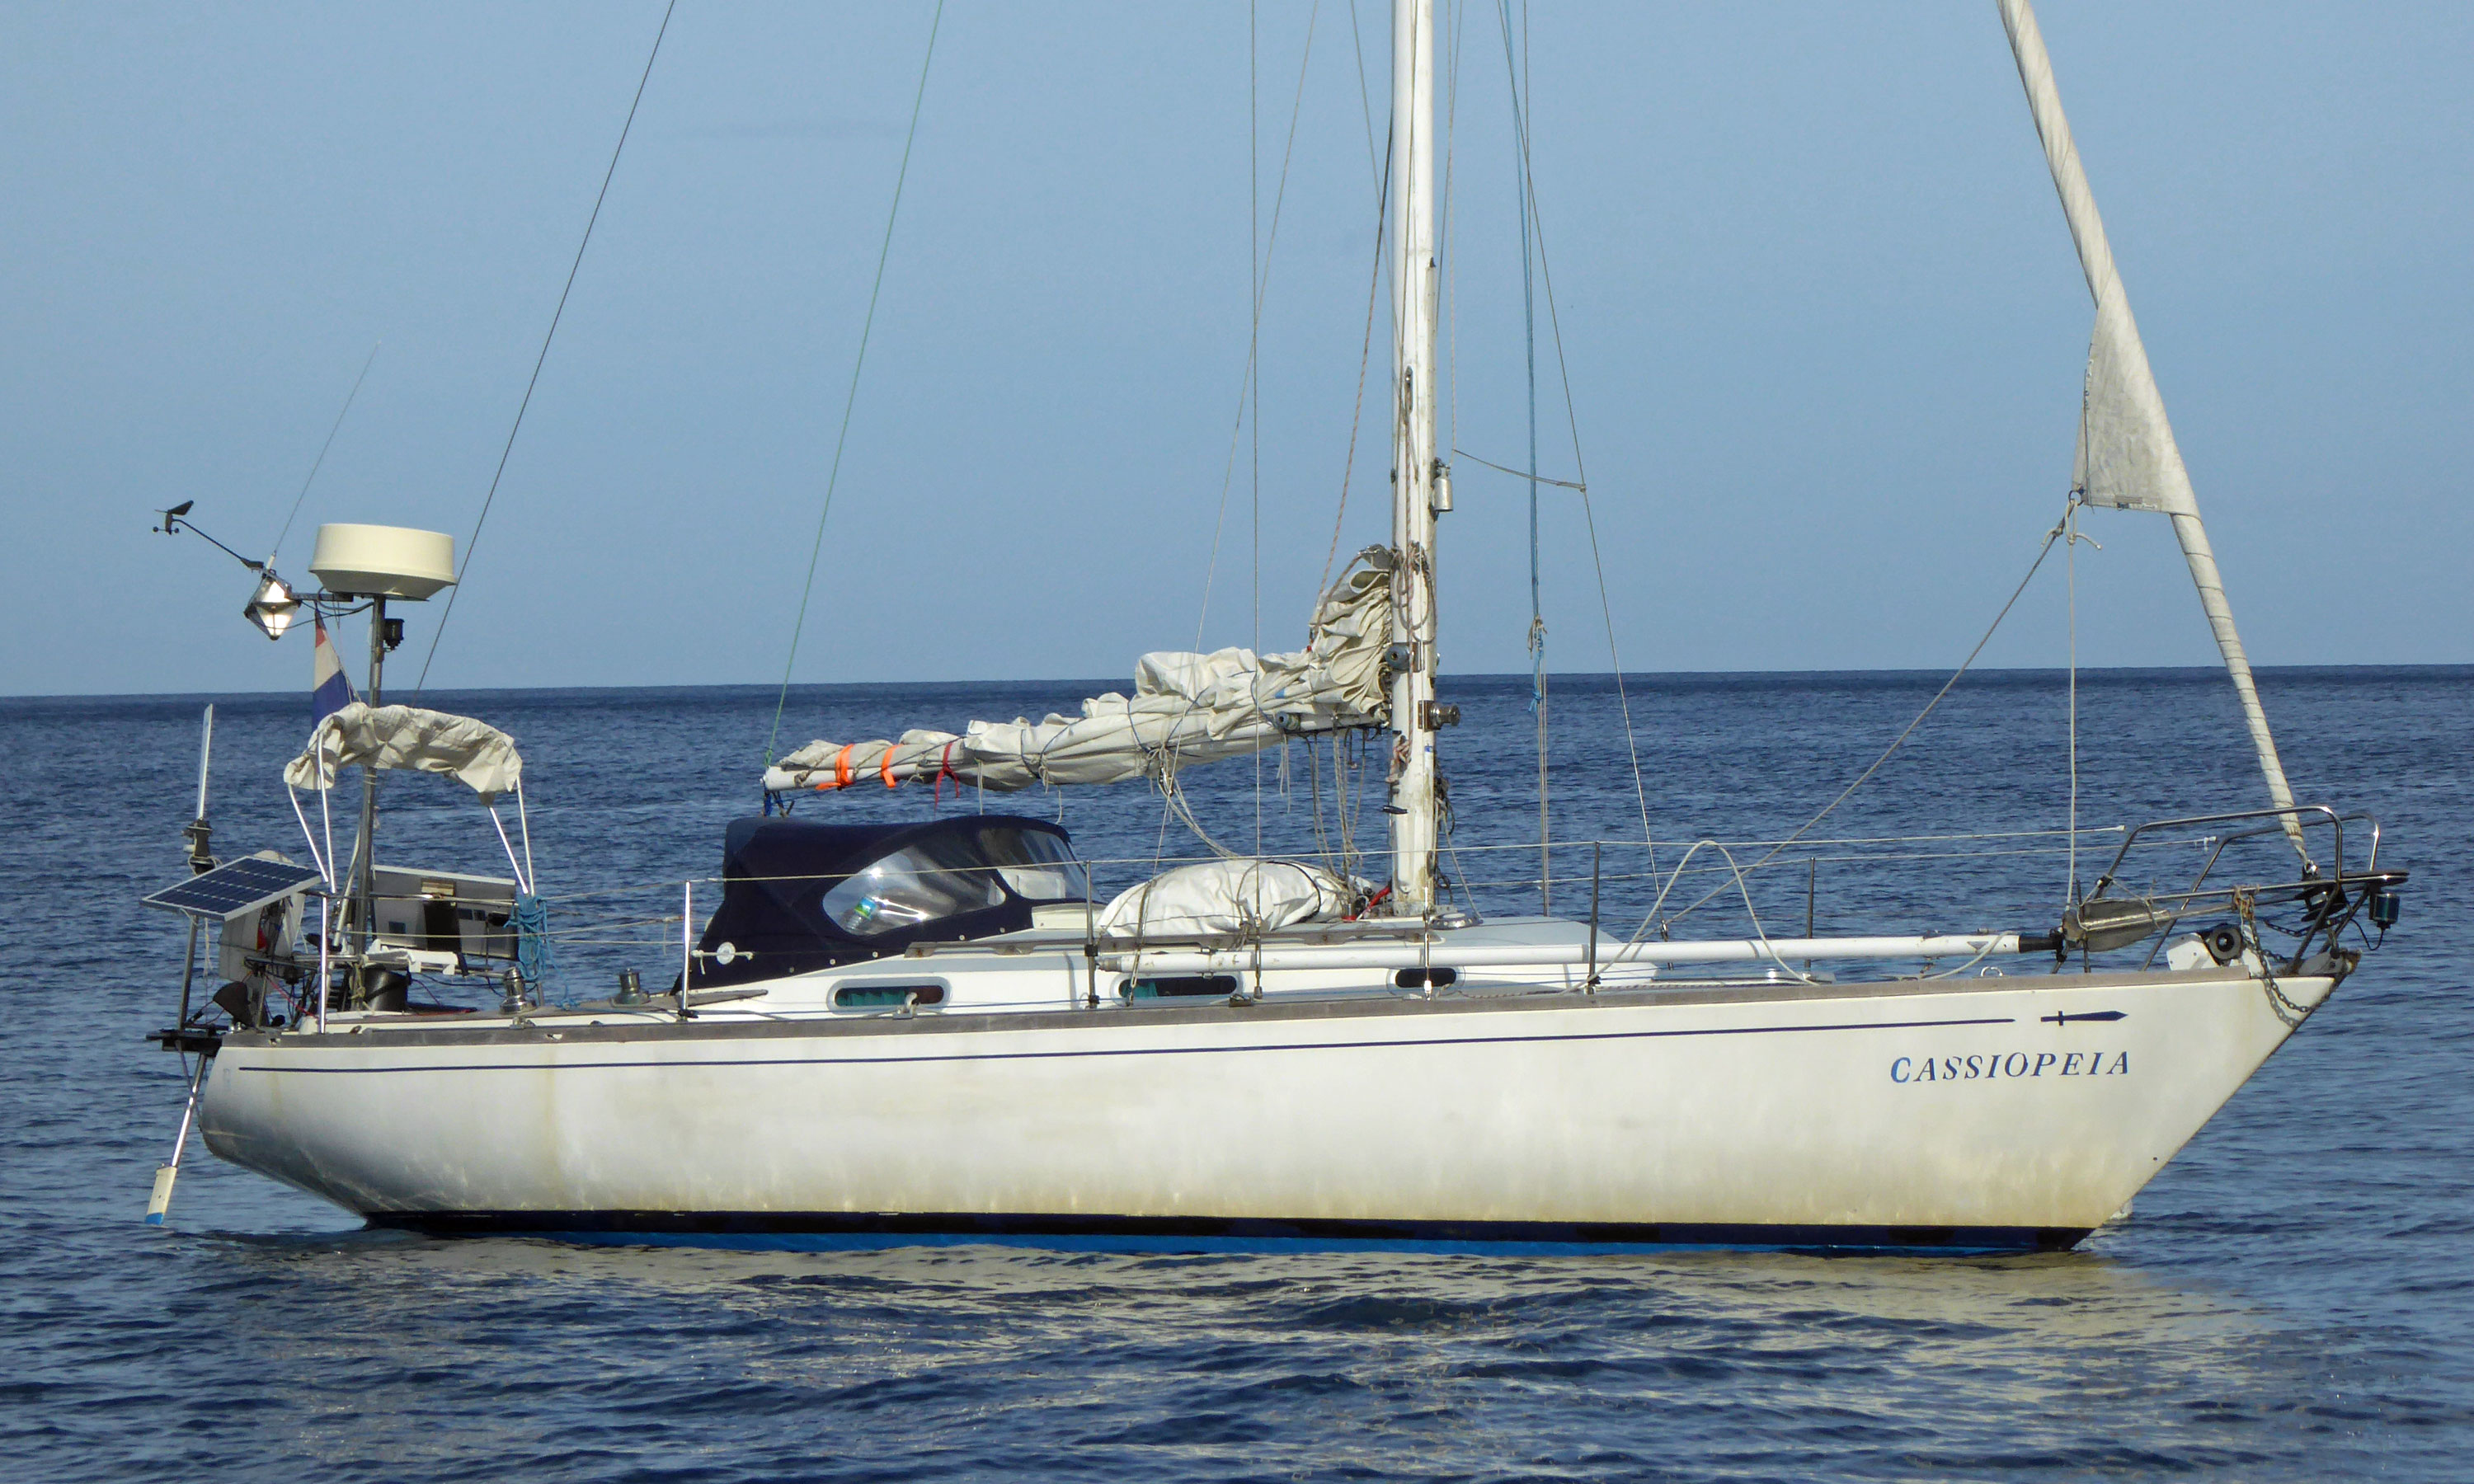 'Cassiopeia', a Gladiateur 33 cruising yacht